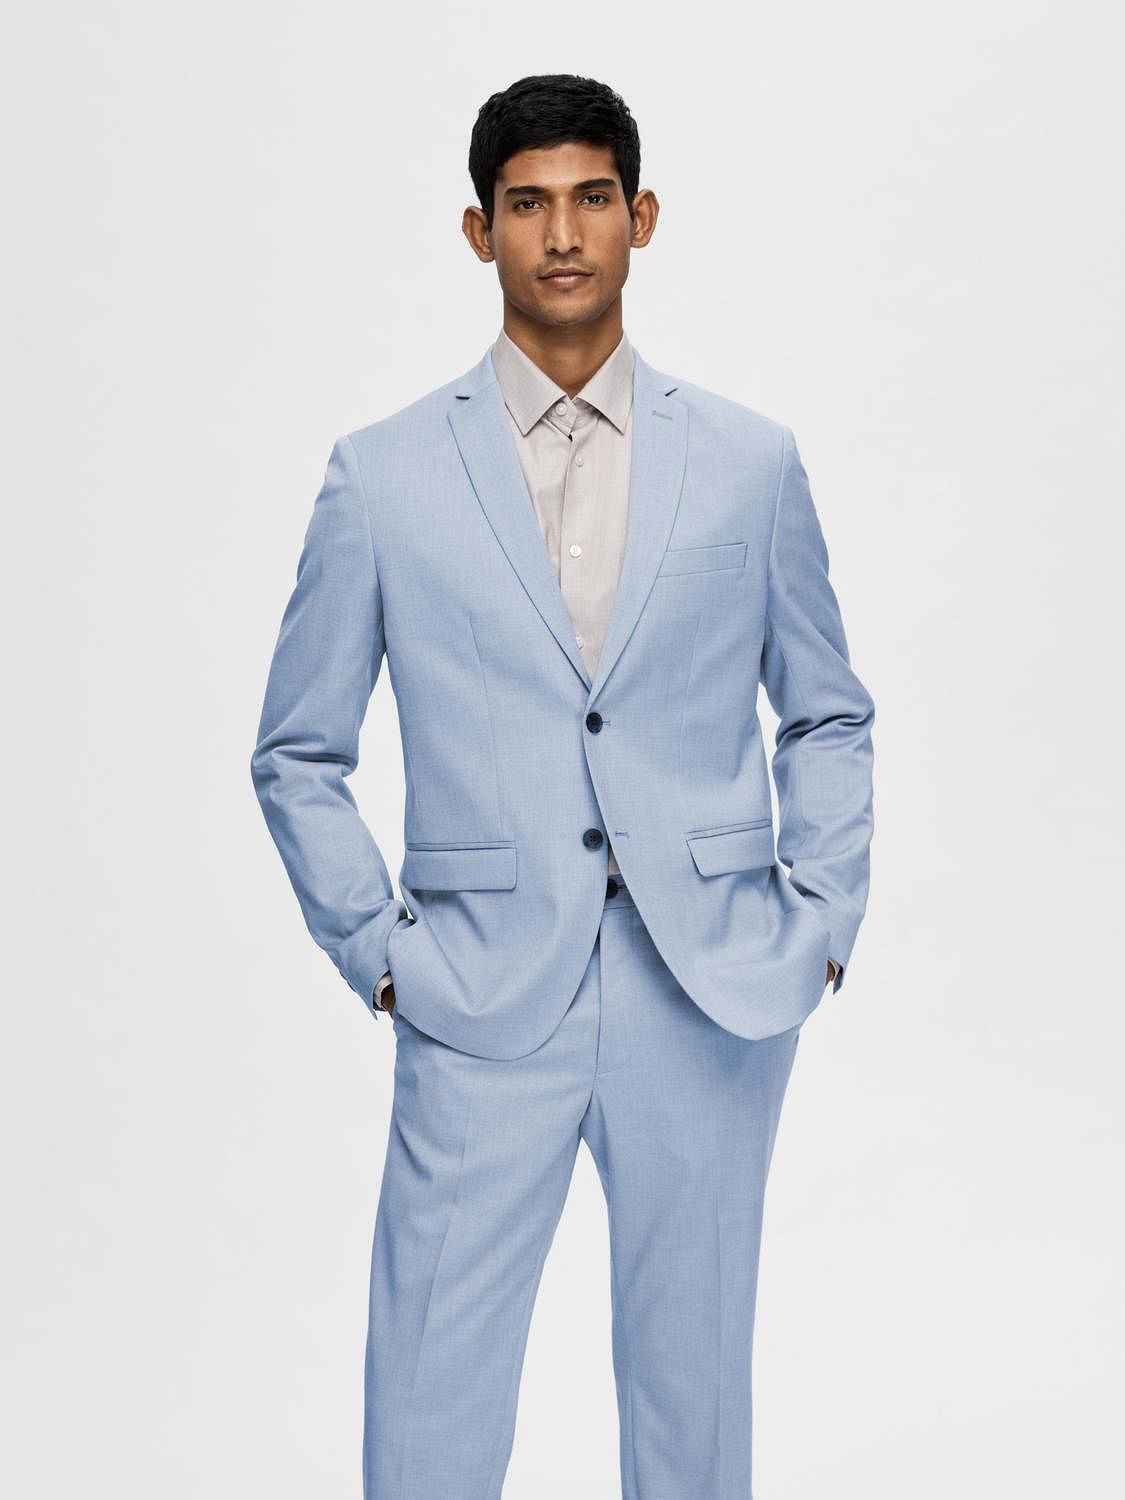 Buy PRINTINDIA Designer Men's Regular Fit Brown Solid Blazer/Formal Blazer  for Men Stylish/Coat for Wedding/Blazers for Men Stylish Wedding Trouser  Suit for Men,M - Brown at Amazon.in